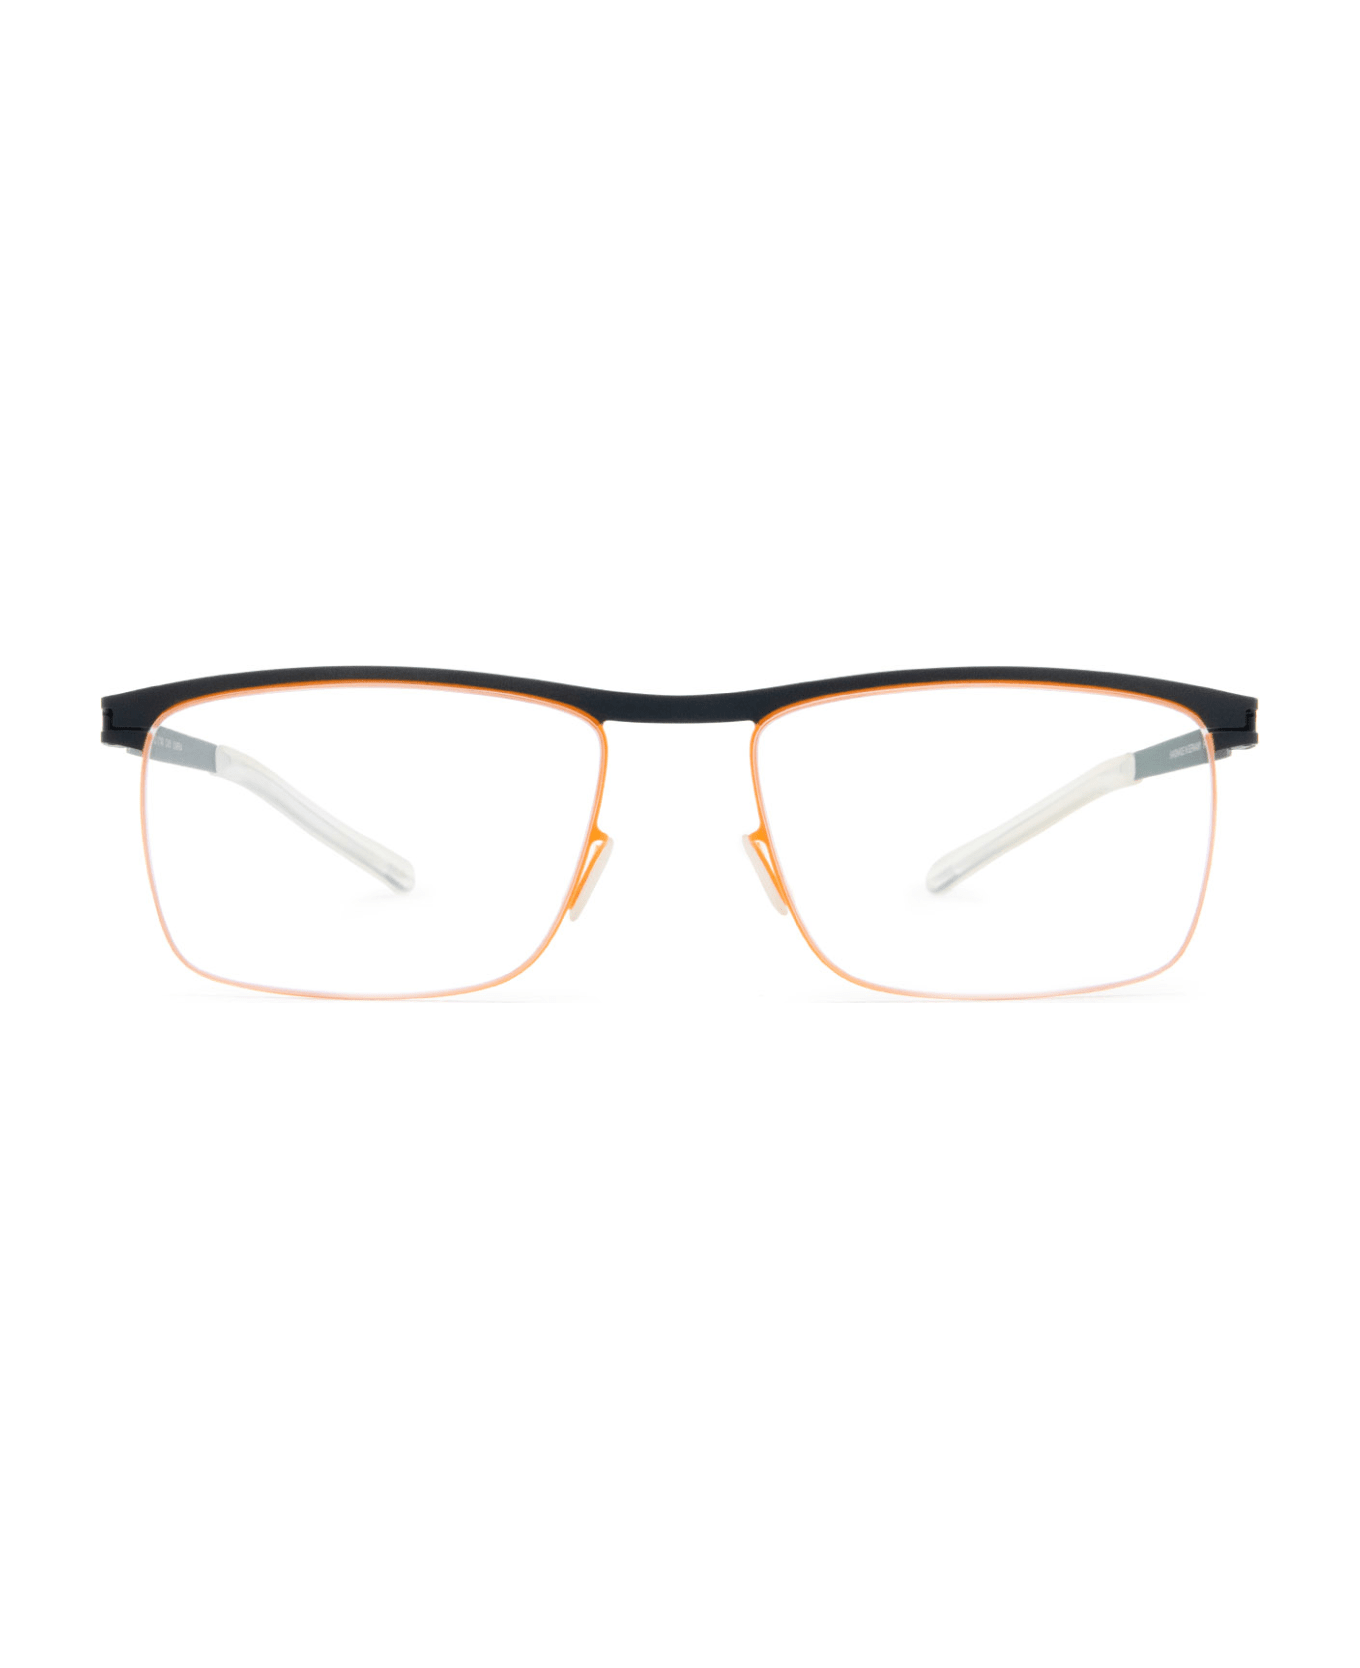 Mykita Darcy Indigo/orange Glasses - Indigo/Orange